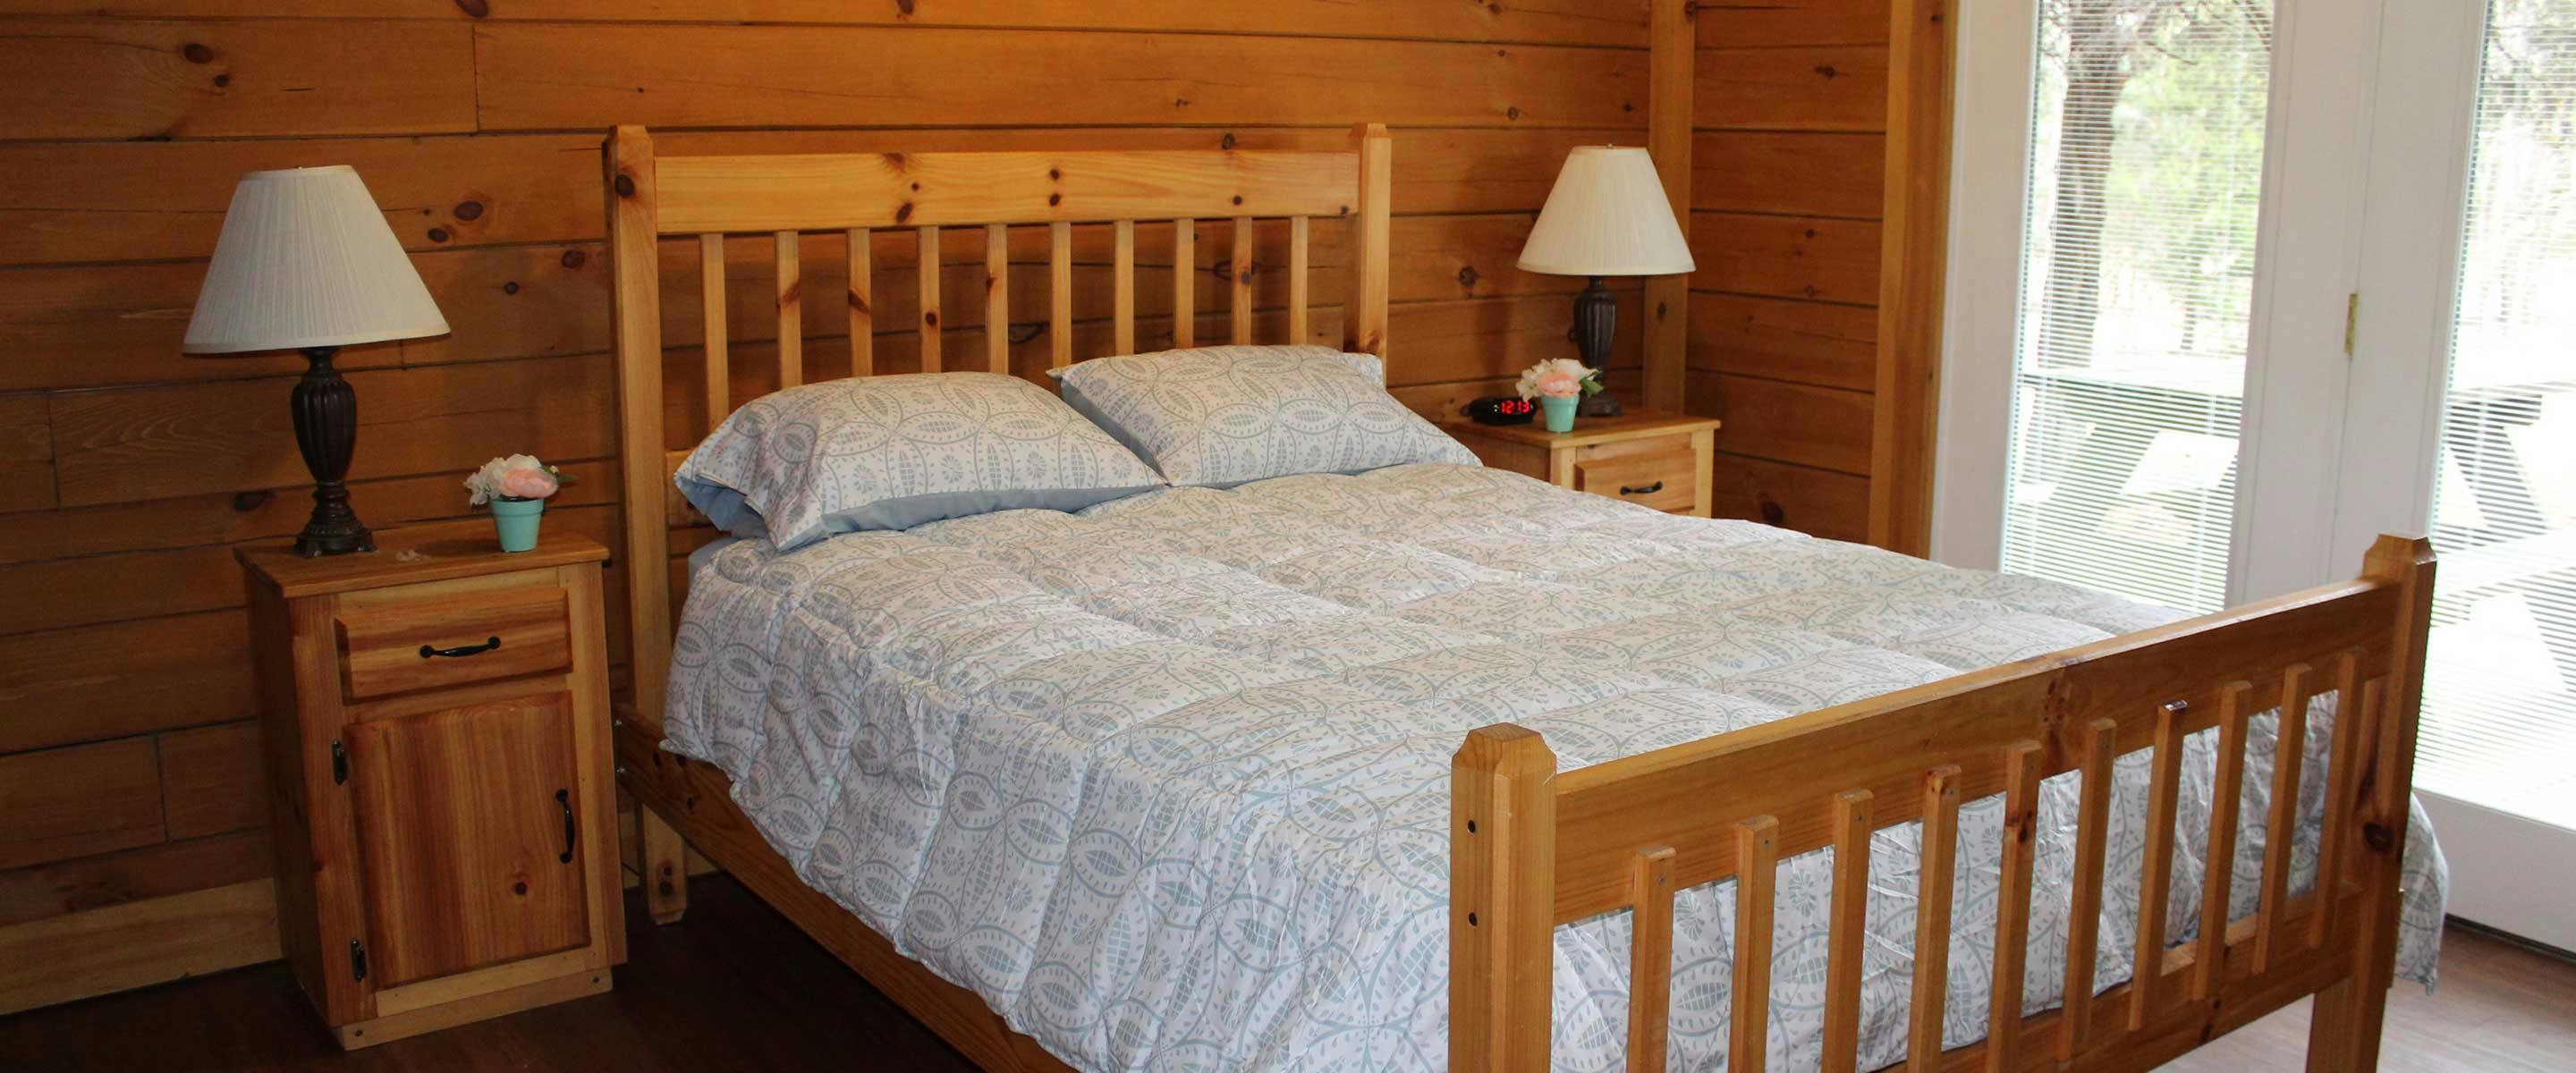 master bed in cabin